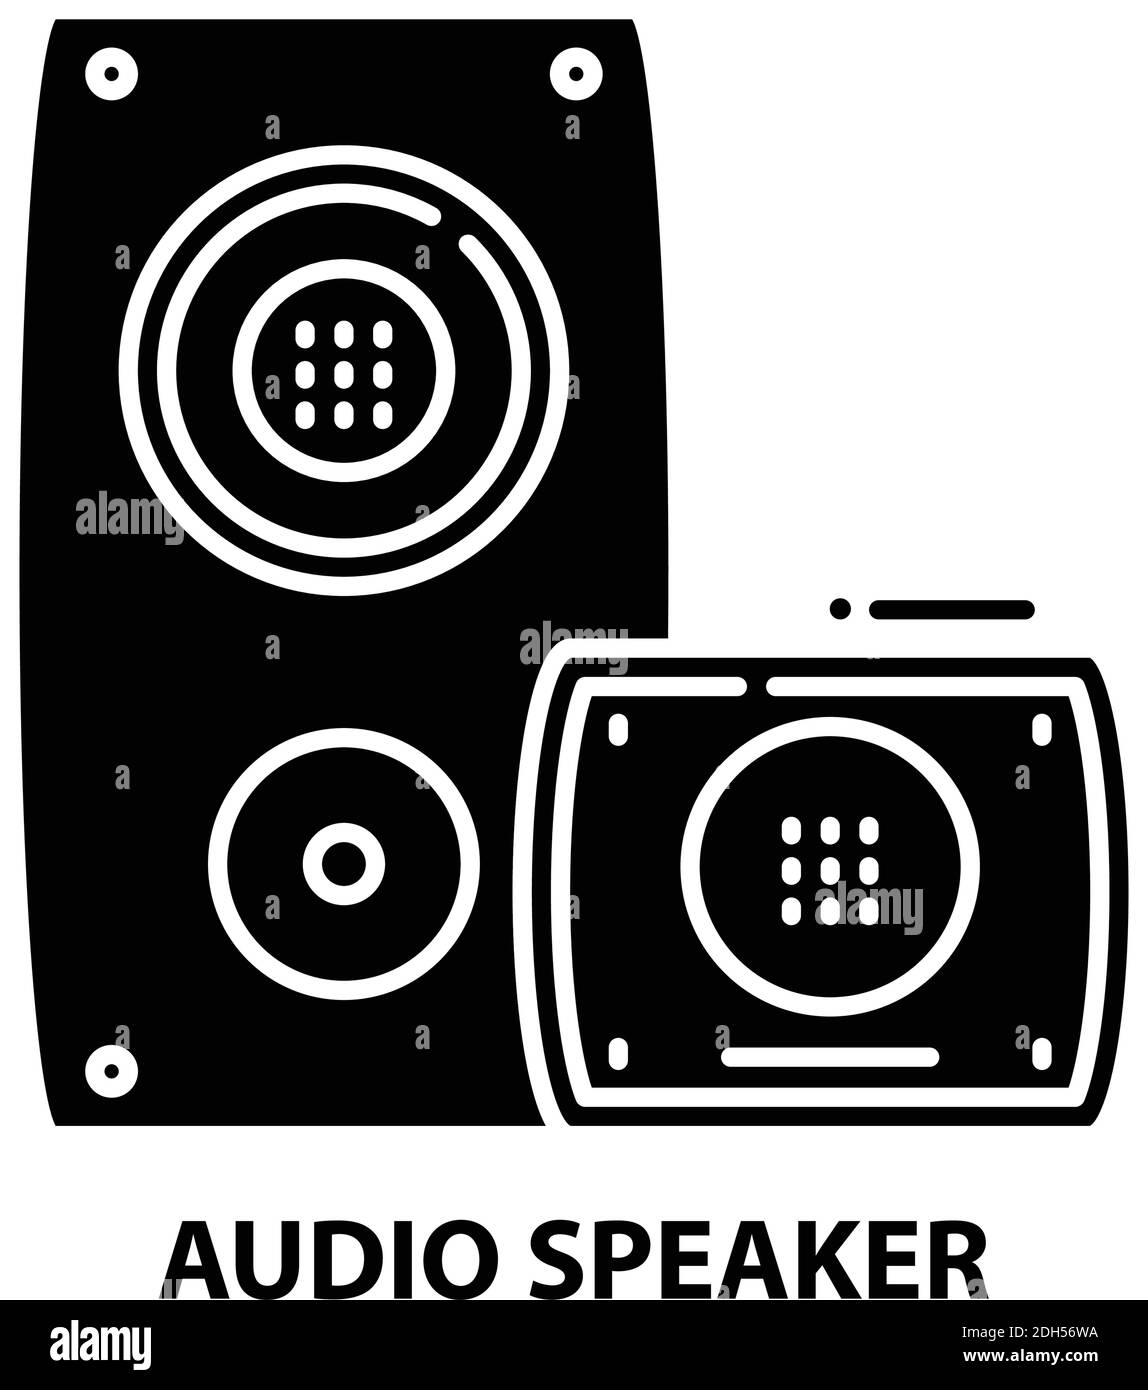 audio speaker icon, black vector sign with editable strokes, concept illustration Stock Vector